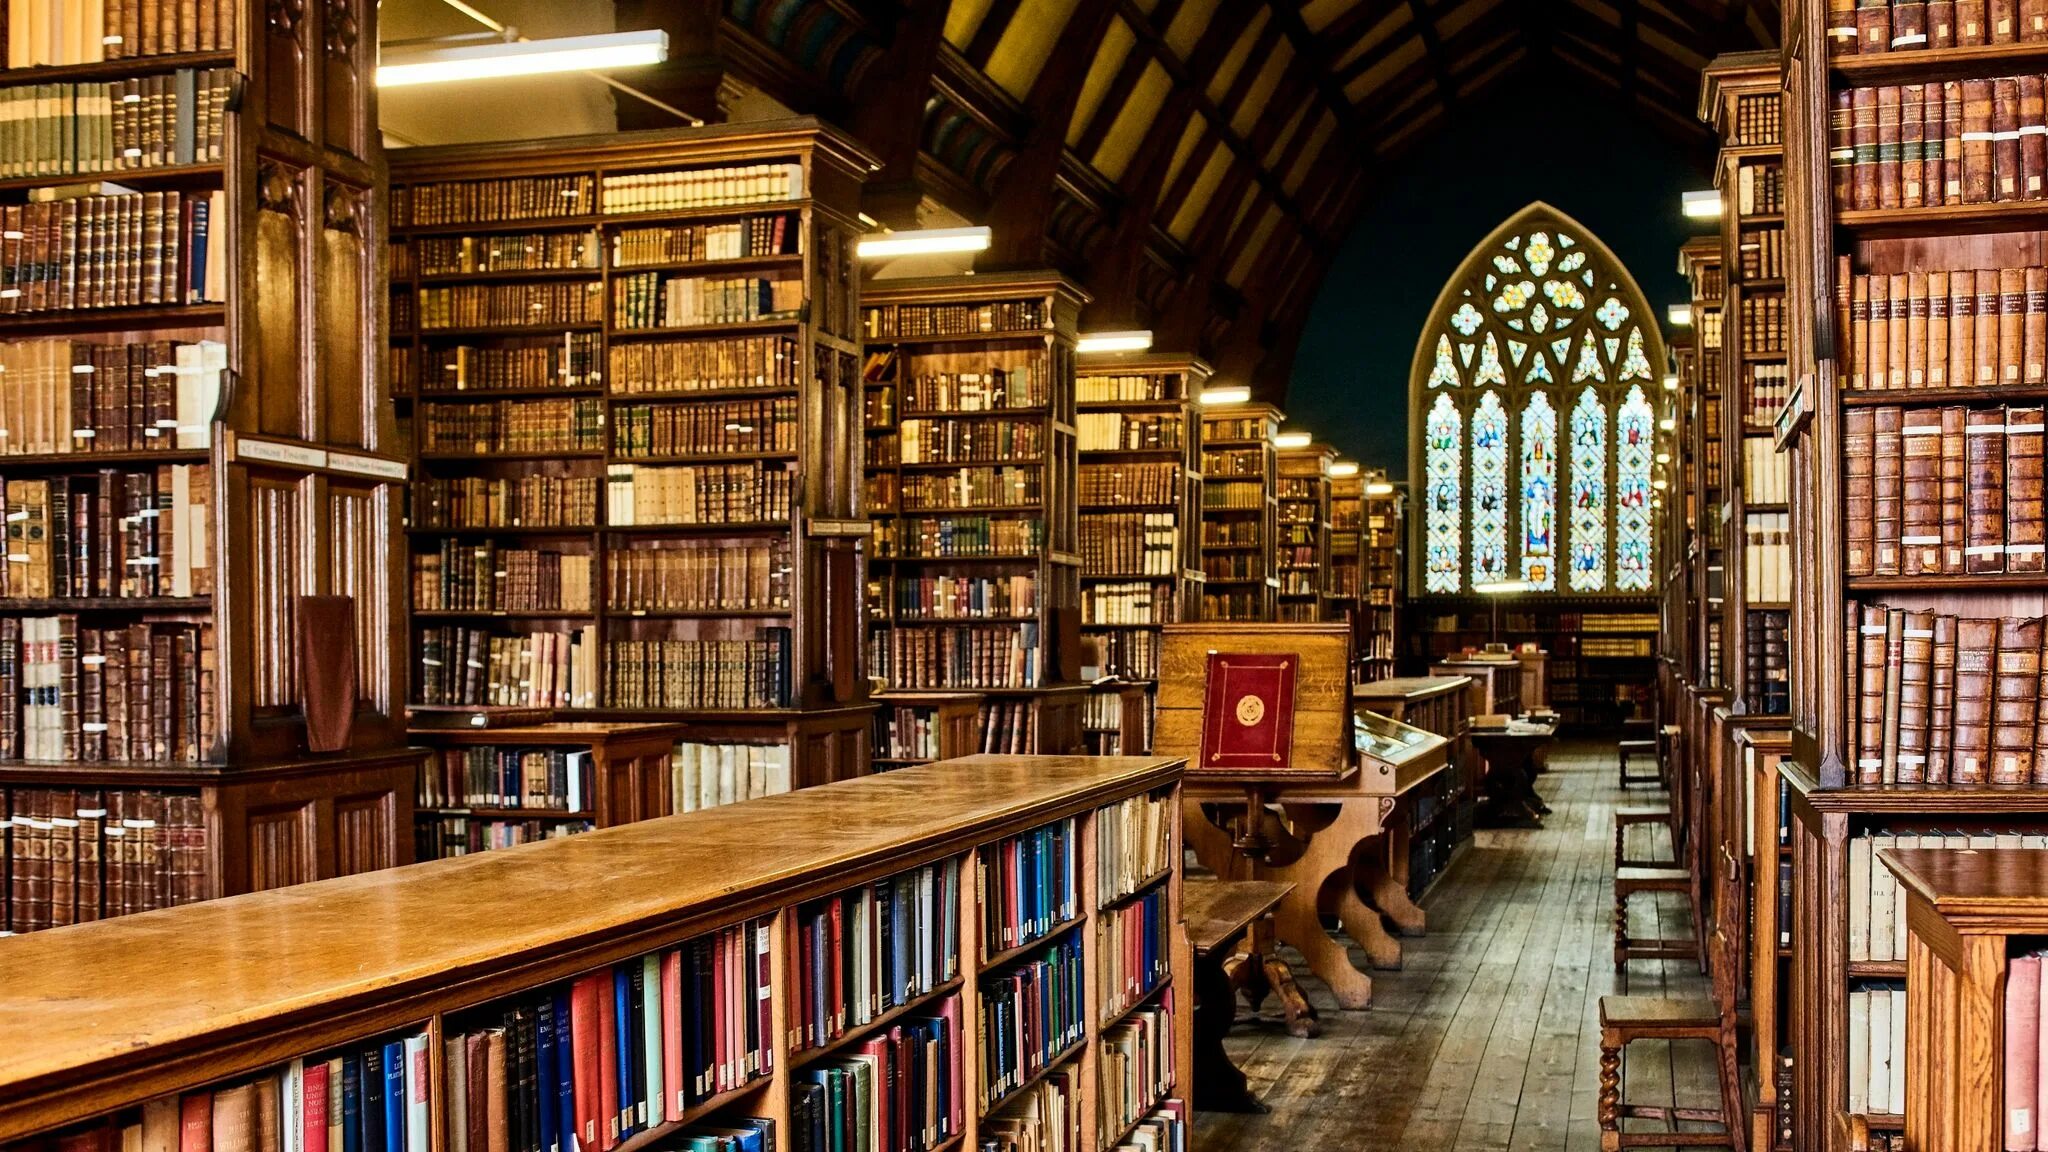 This is our library. Даремский университет внутри. Даремский университет библиотека. Стэнфорд университет библиотека. Мусульманская библиотека.